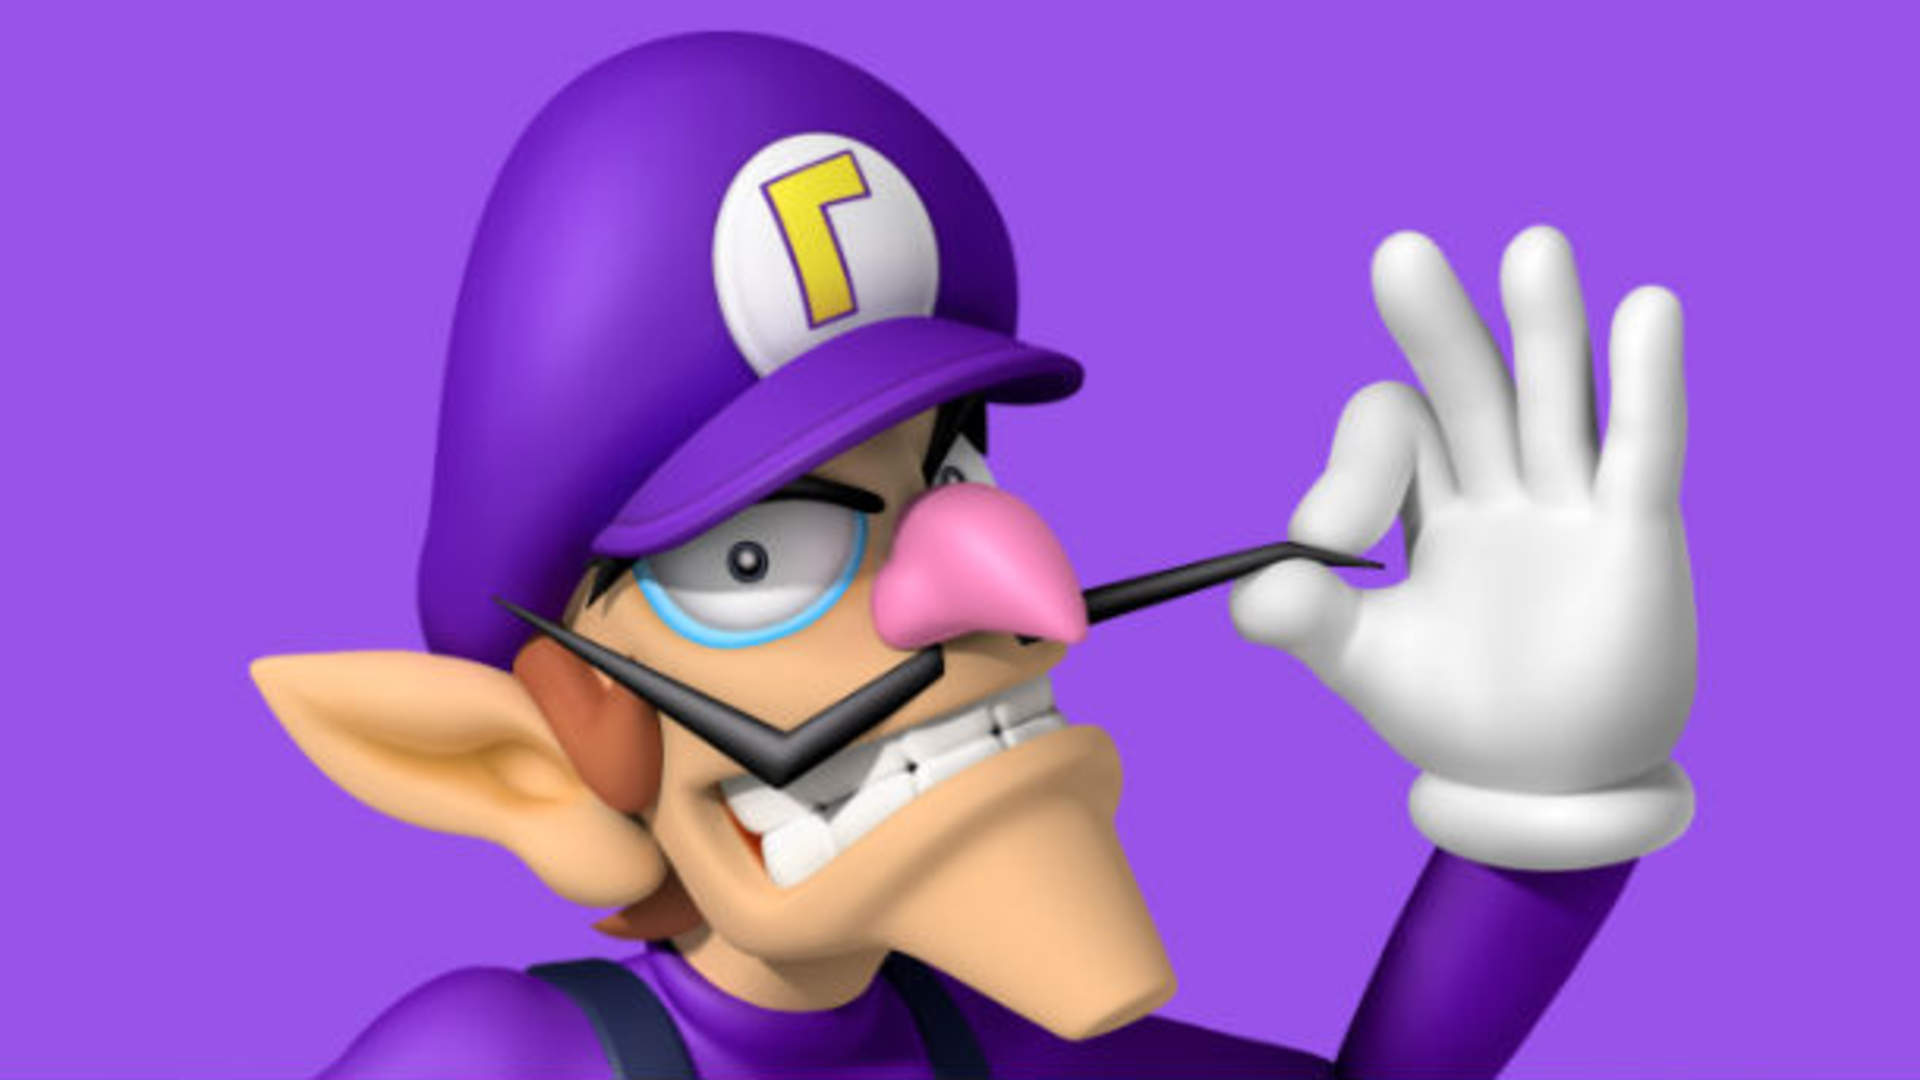 funny luigi fan theories - Waluigi video game character holding mustache